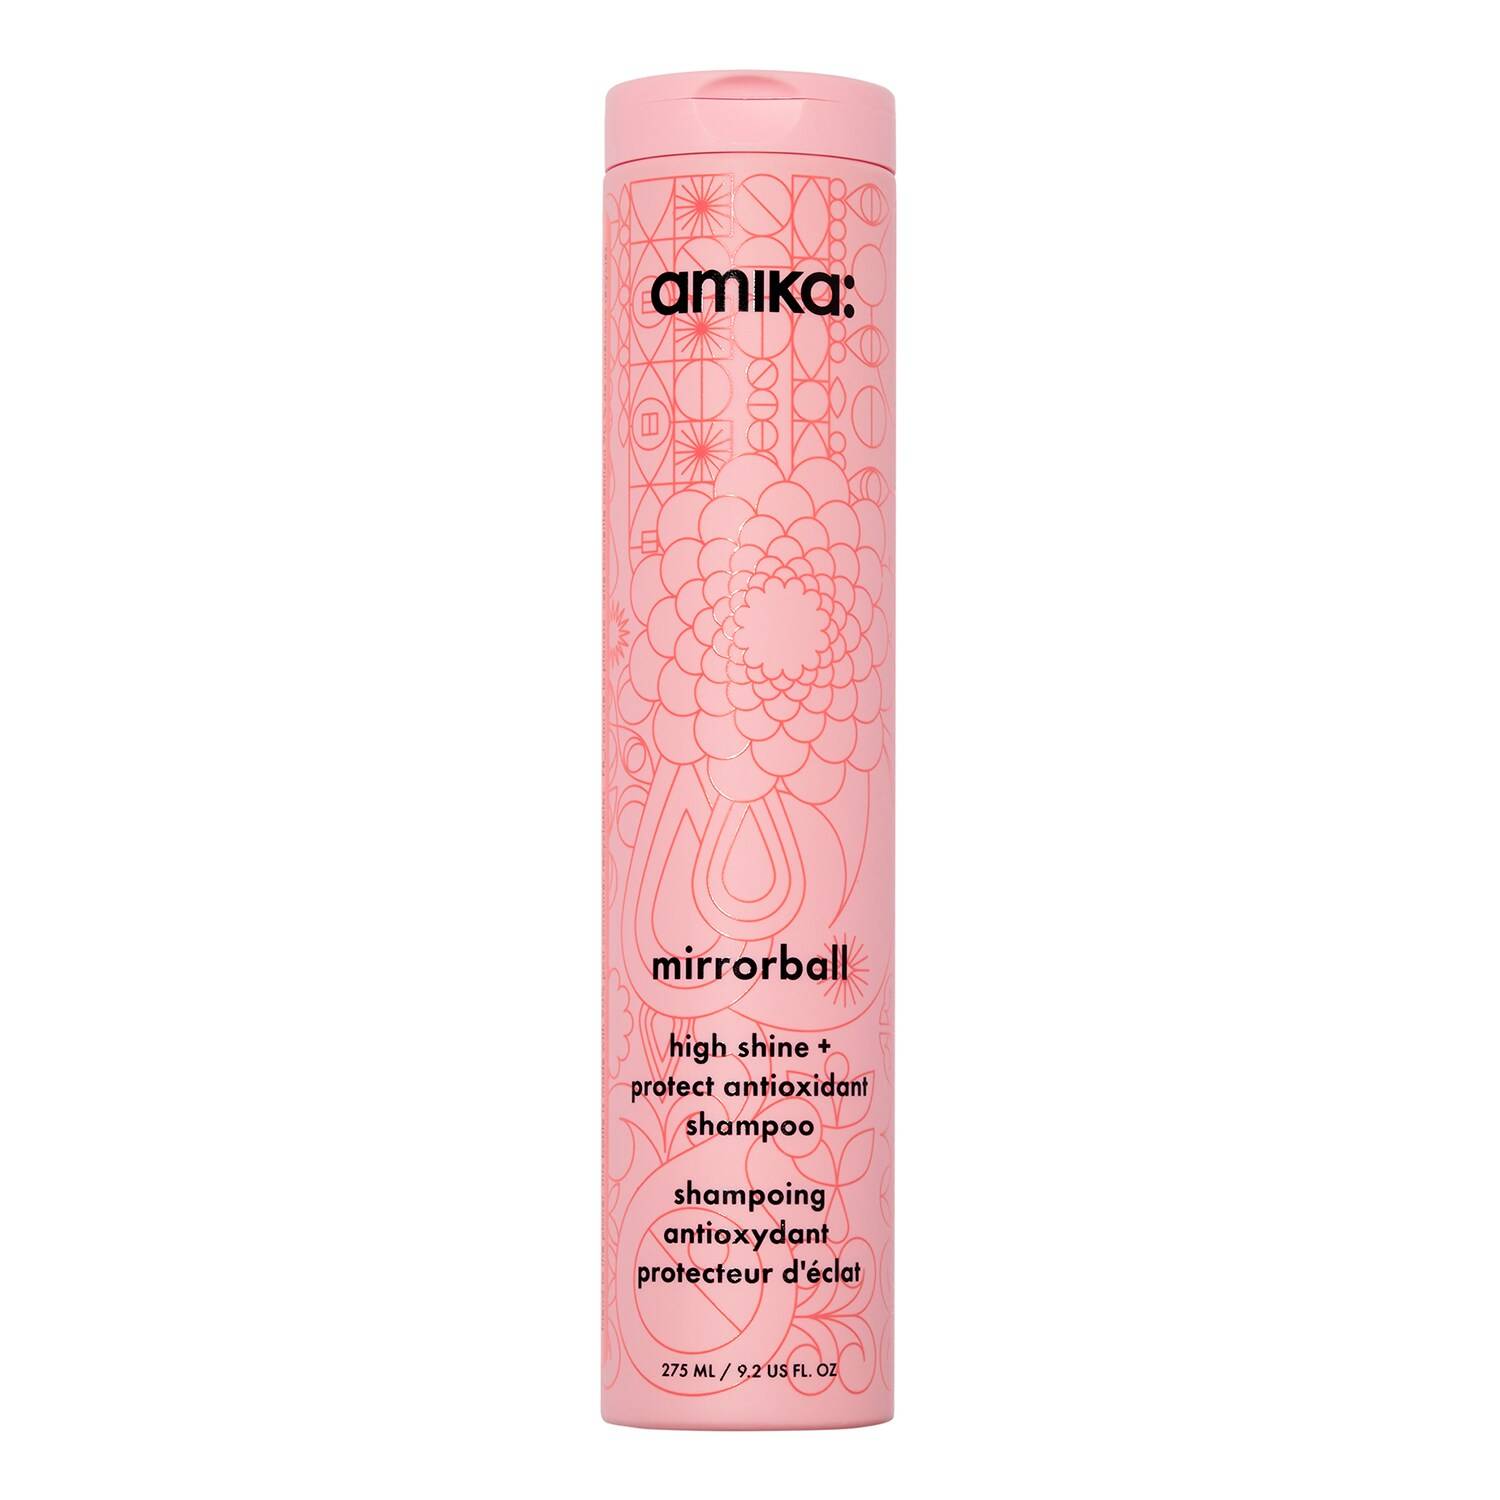 AMIKA Mirrorball High Shine+ Protect Antioxidant Shampoo 275ml